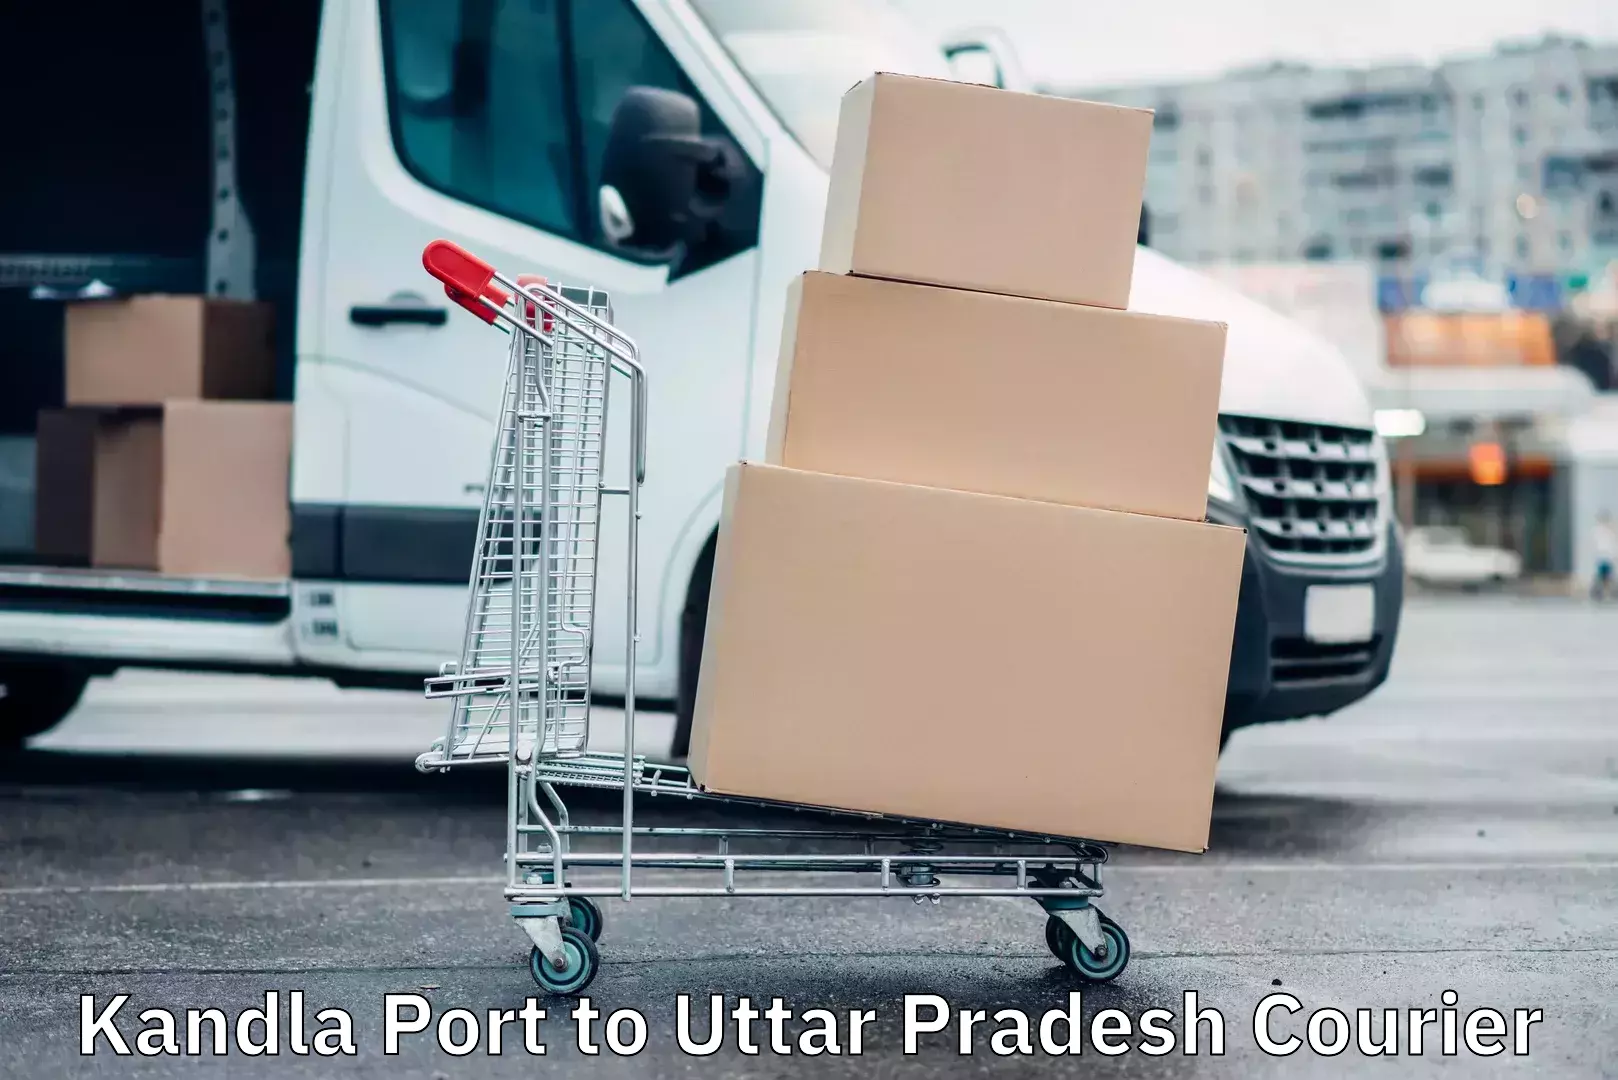 Express postal services Kandla Port to Uttar Pradesh